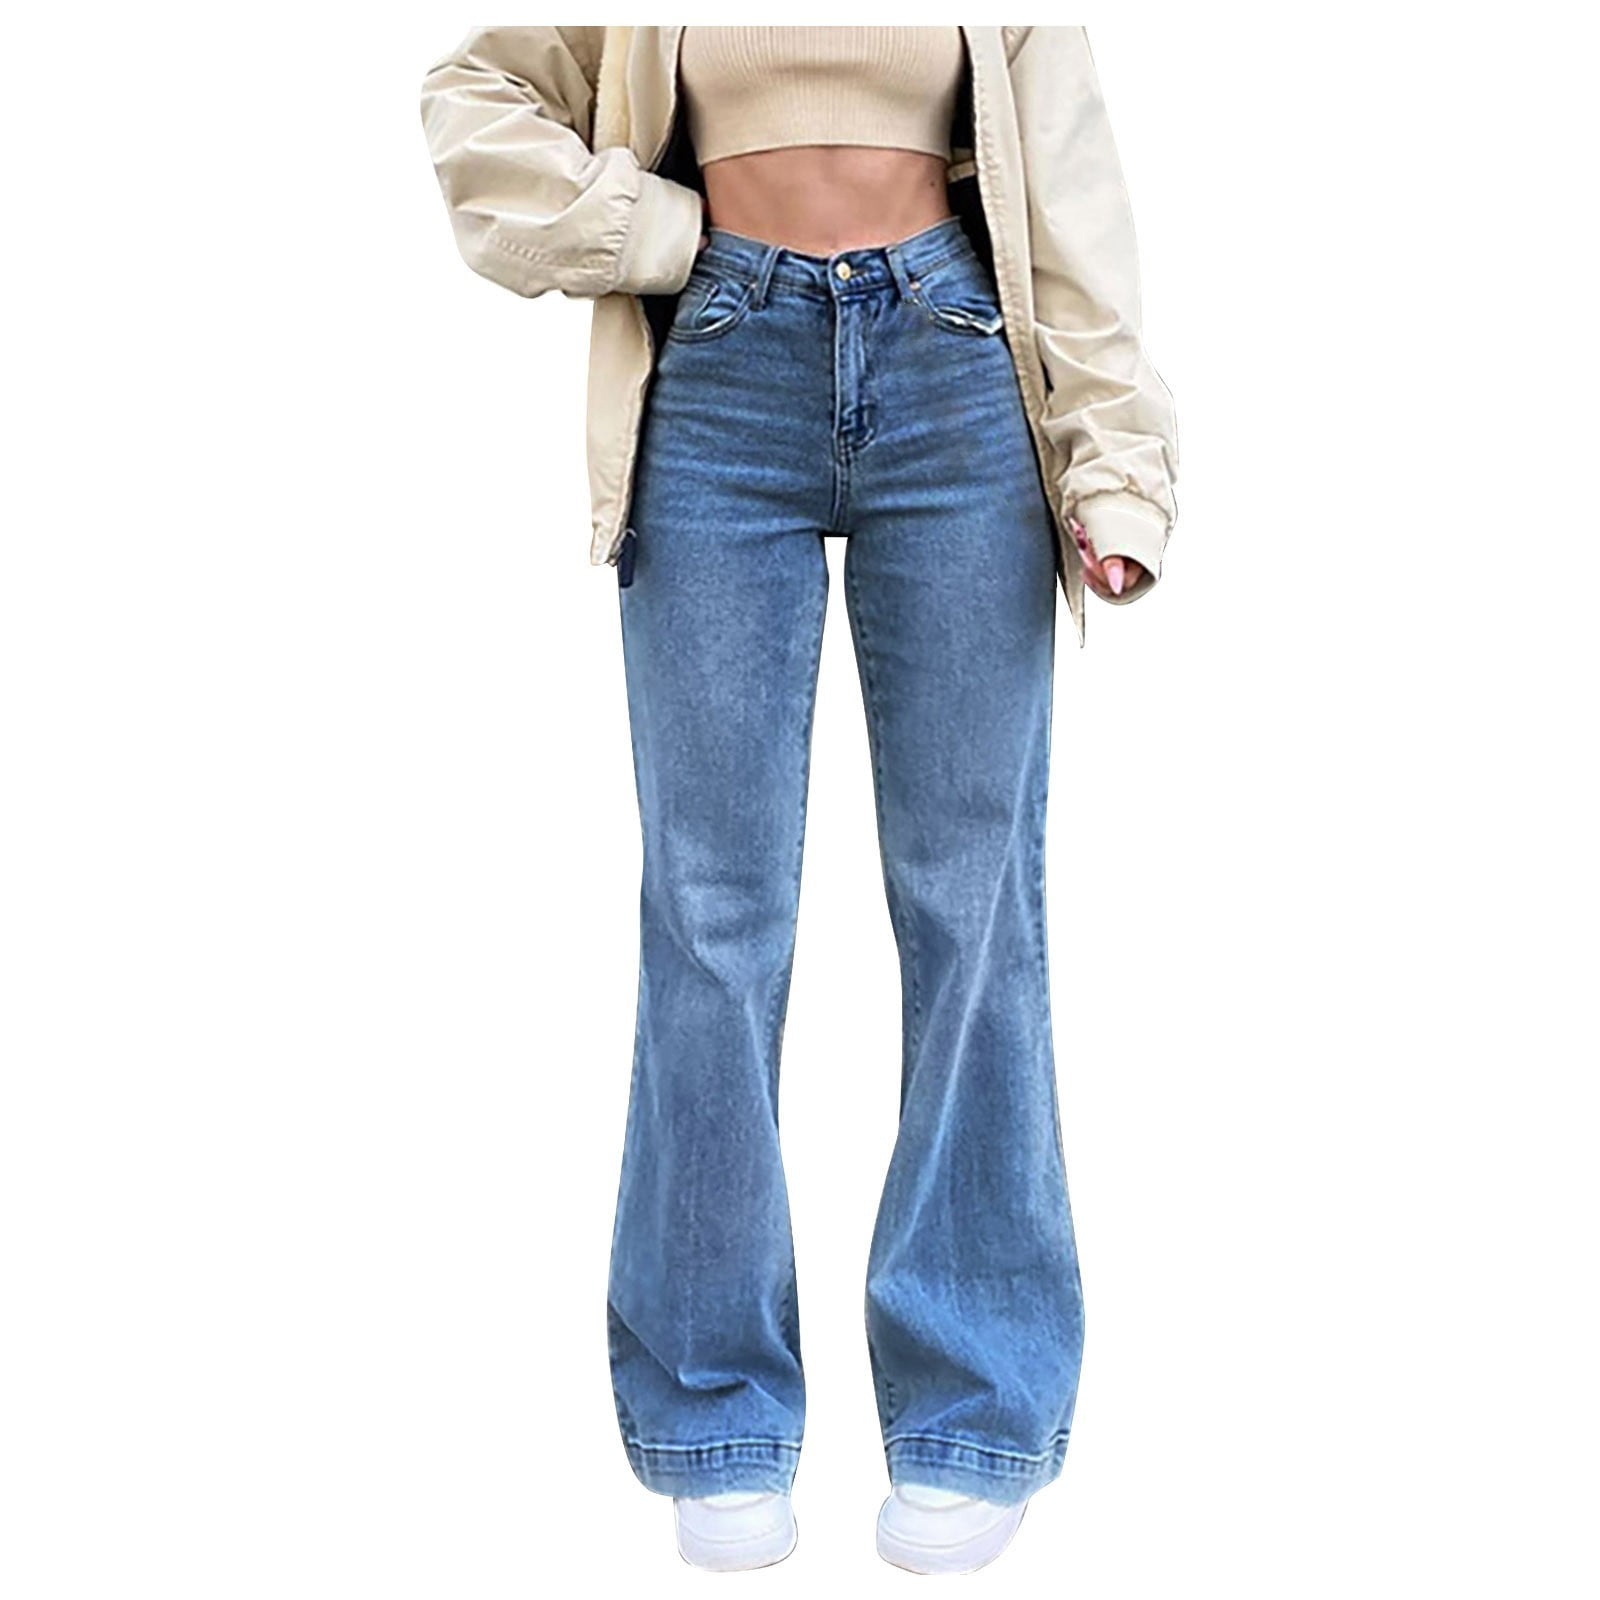 Jordache Girls Super Skinny High Rise Jeans, Sizes 5-18 & Slim